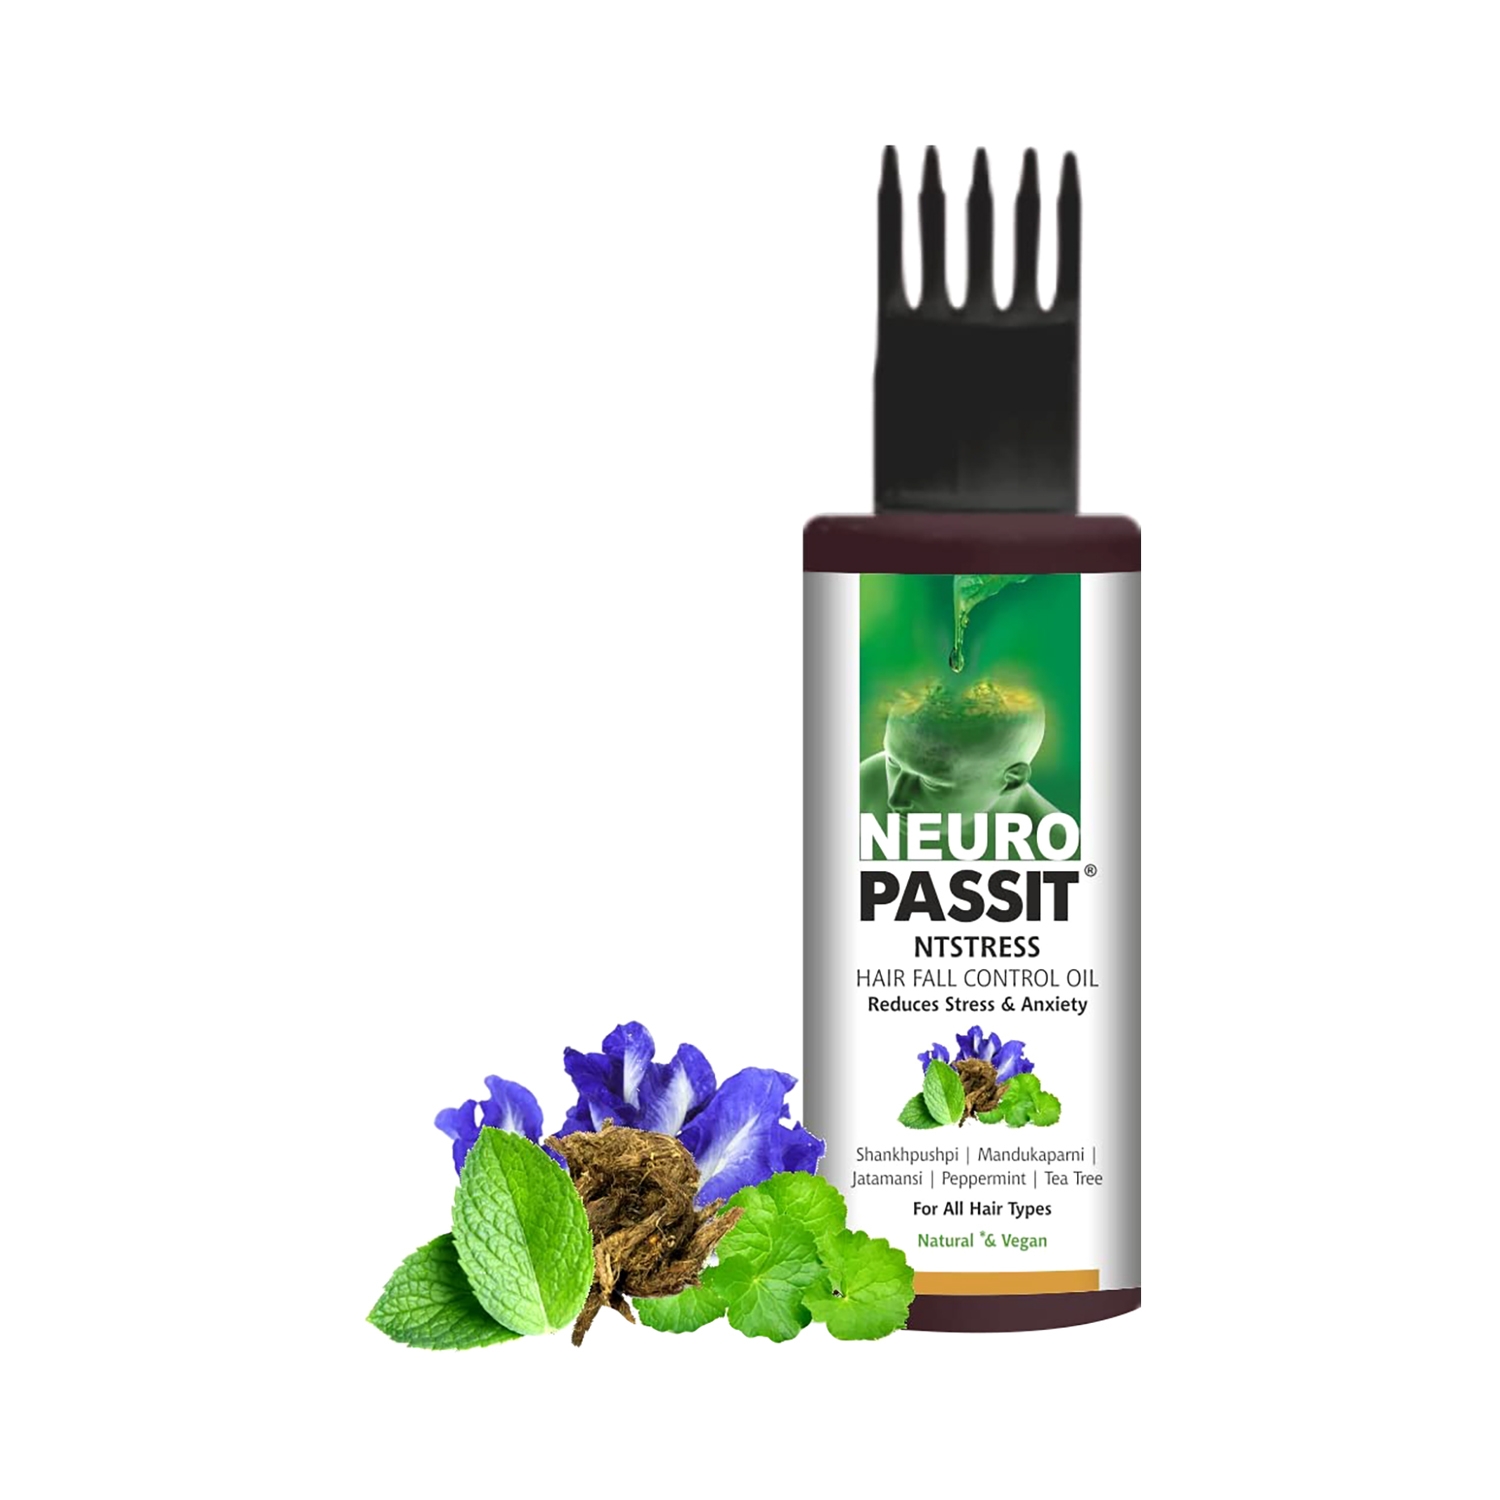 Passion Indulge Hair Fall Control Neuropassit Ntstress Oil (100 ml)